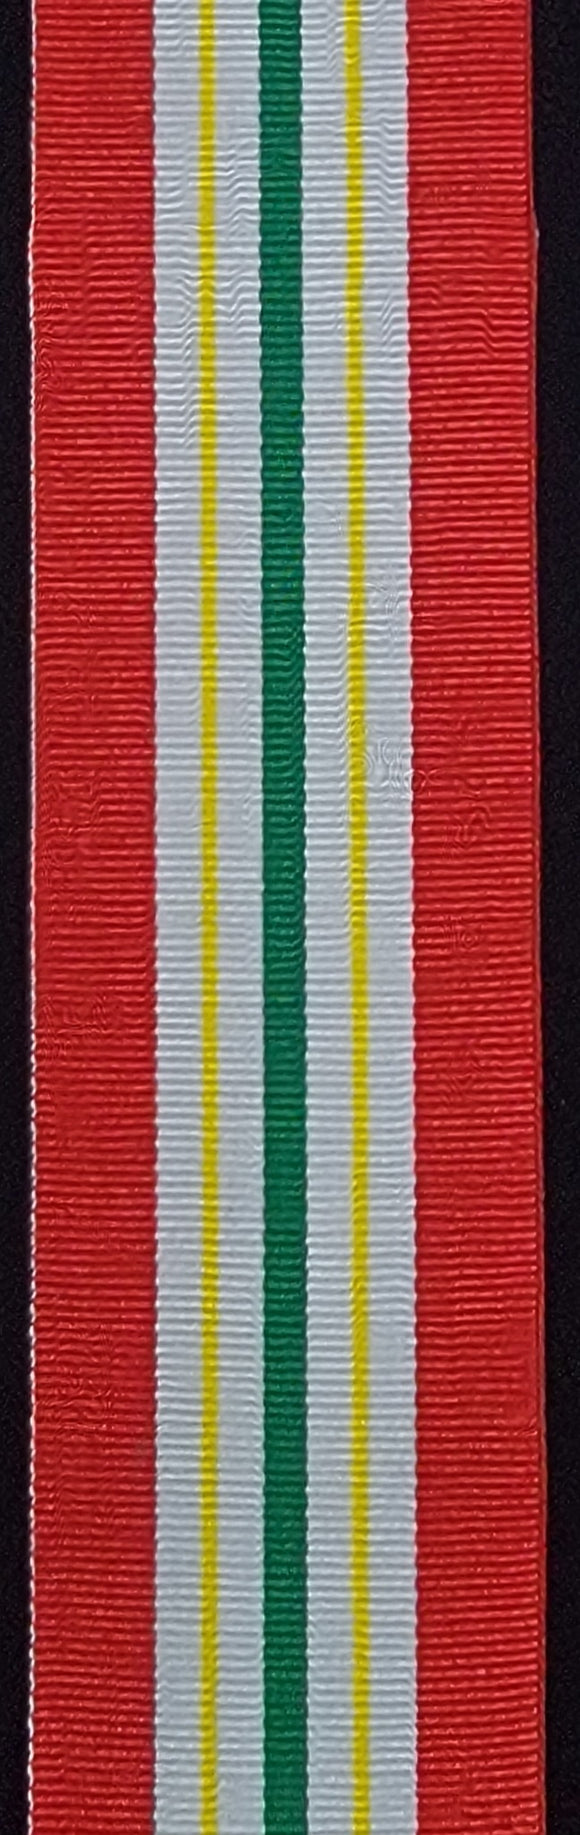 Ribbon, Order of Ontario